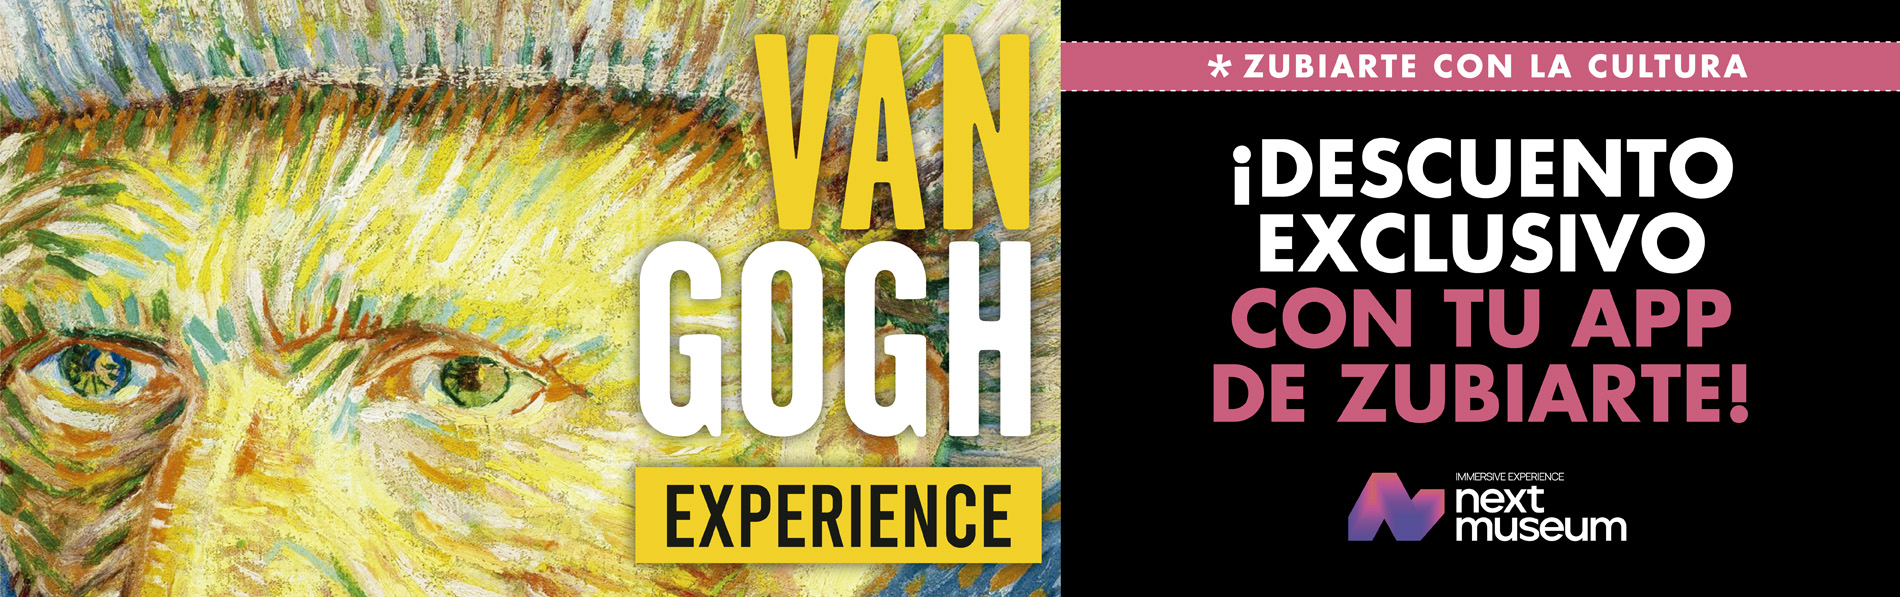 Van gogh experience